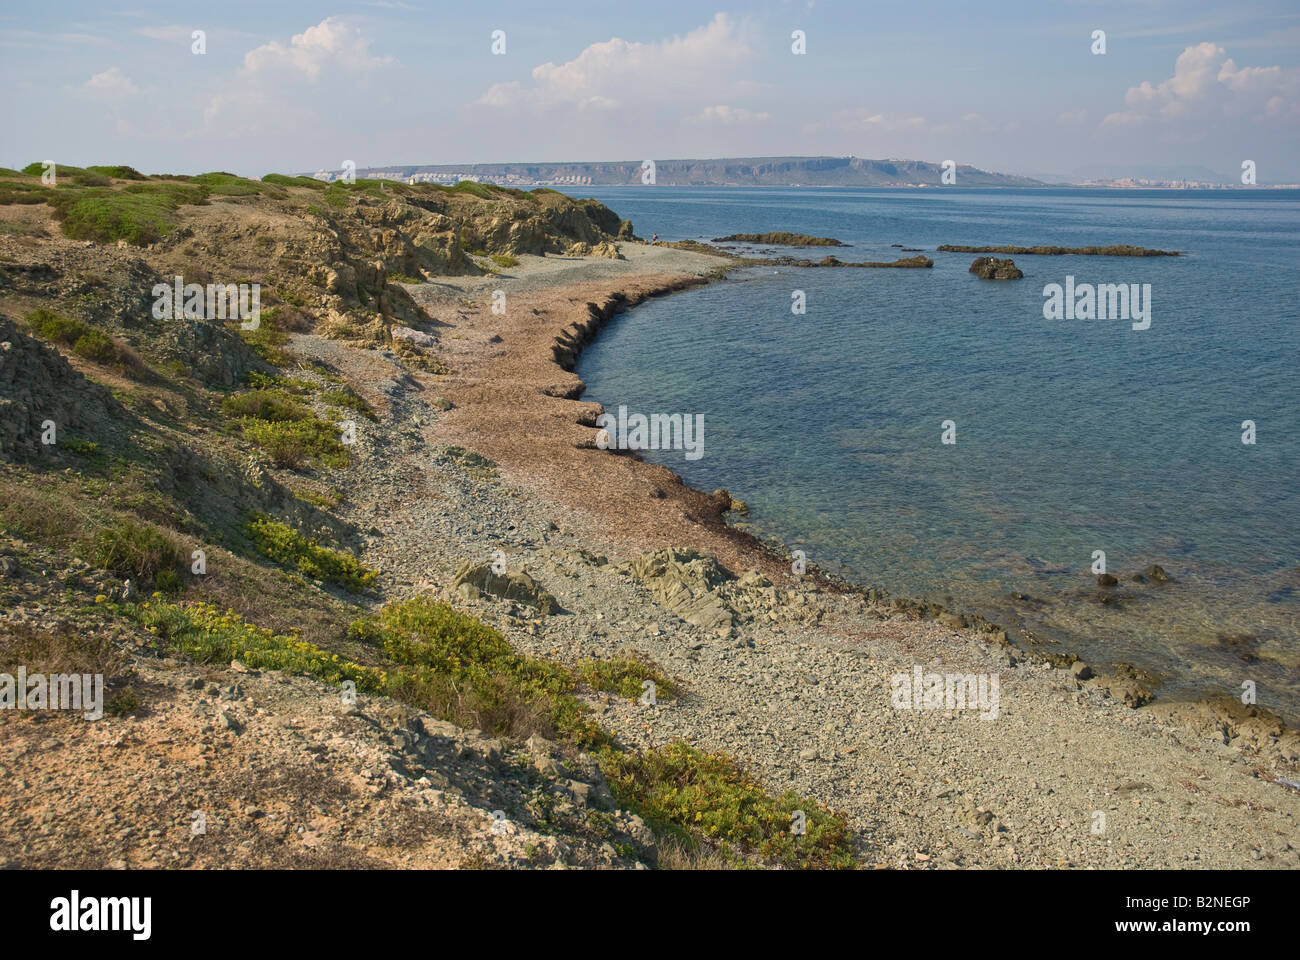 Clear water and coastline of Isla Tabarca, Alicante, Spain Stock Photo -  Alamy